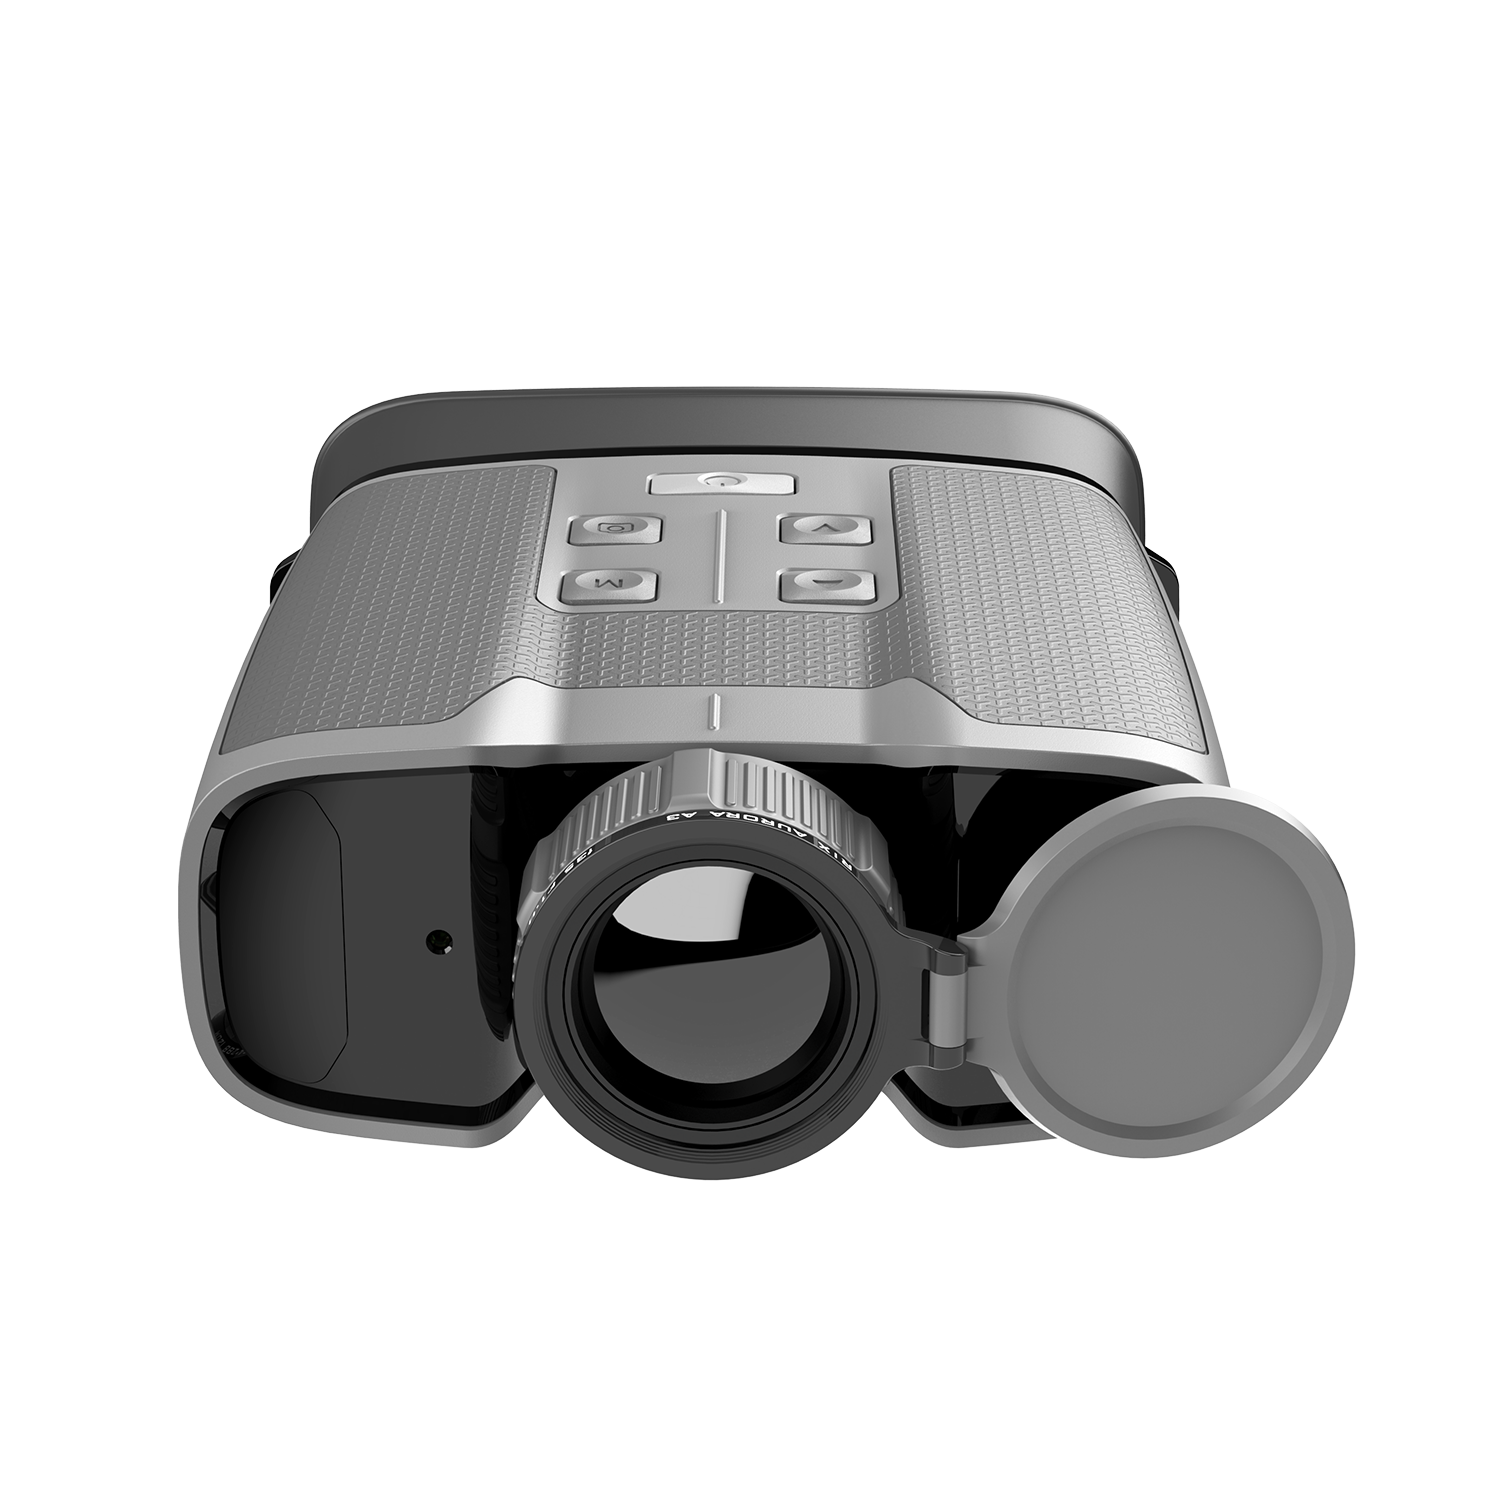 AURORA A3 Thermal Imaging Binoculars